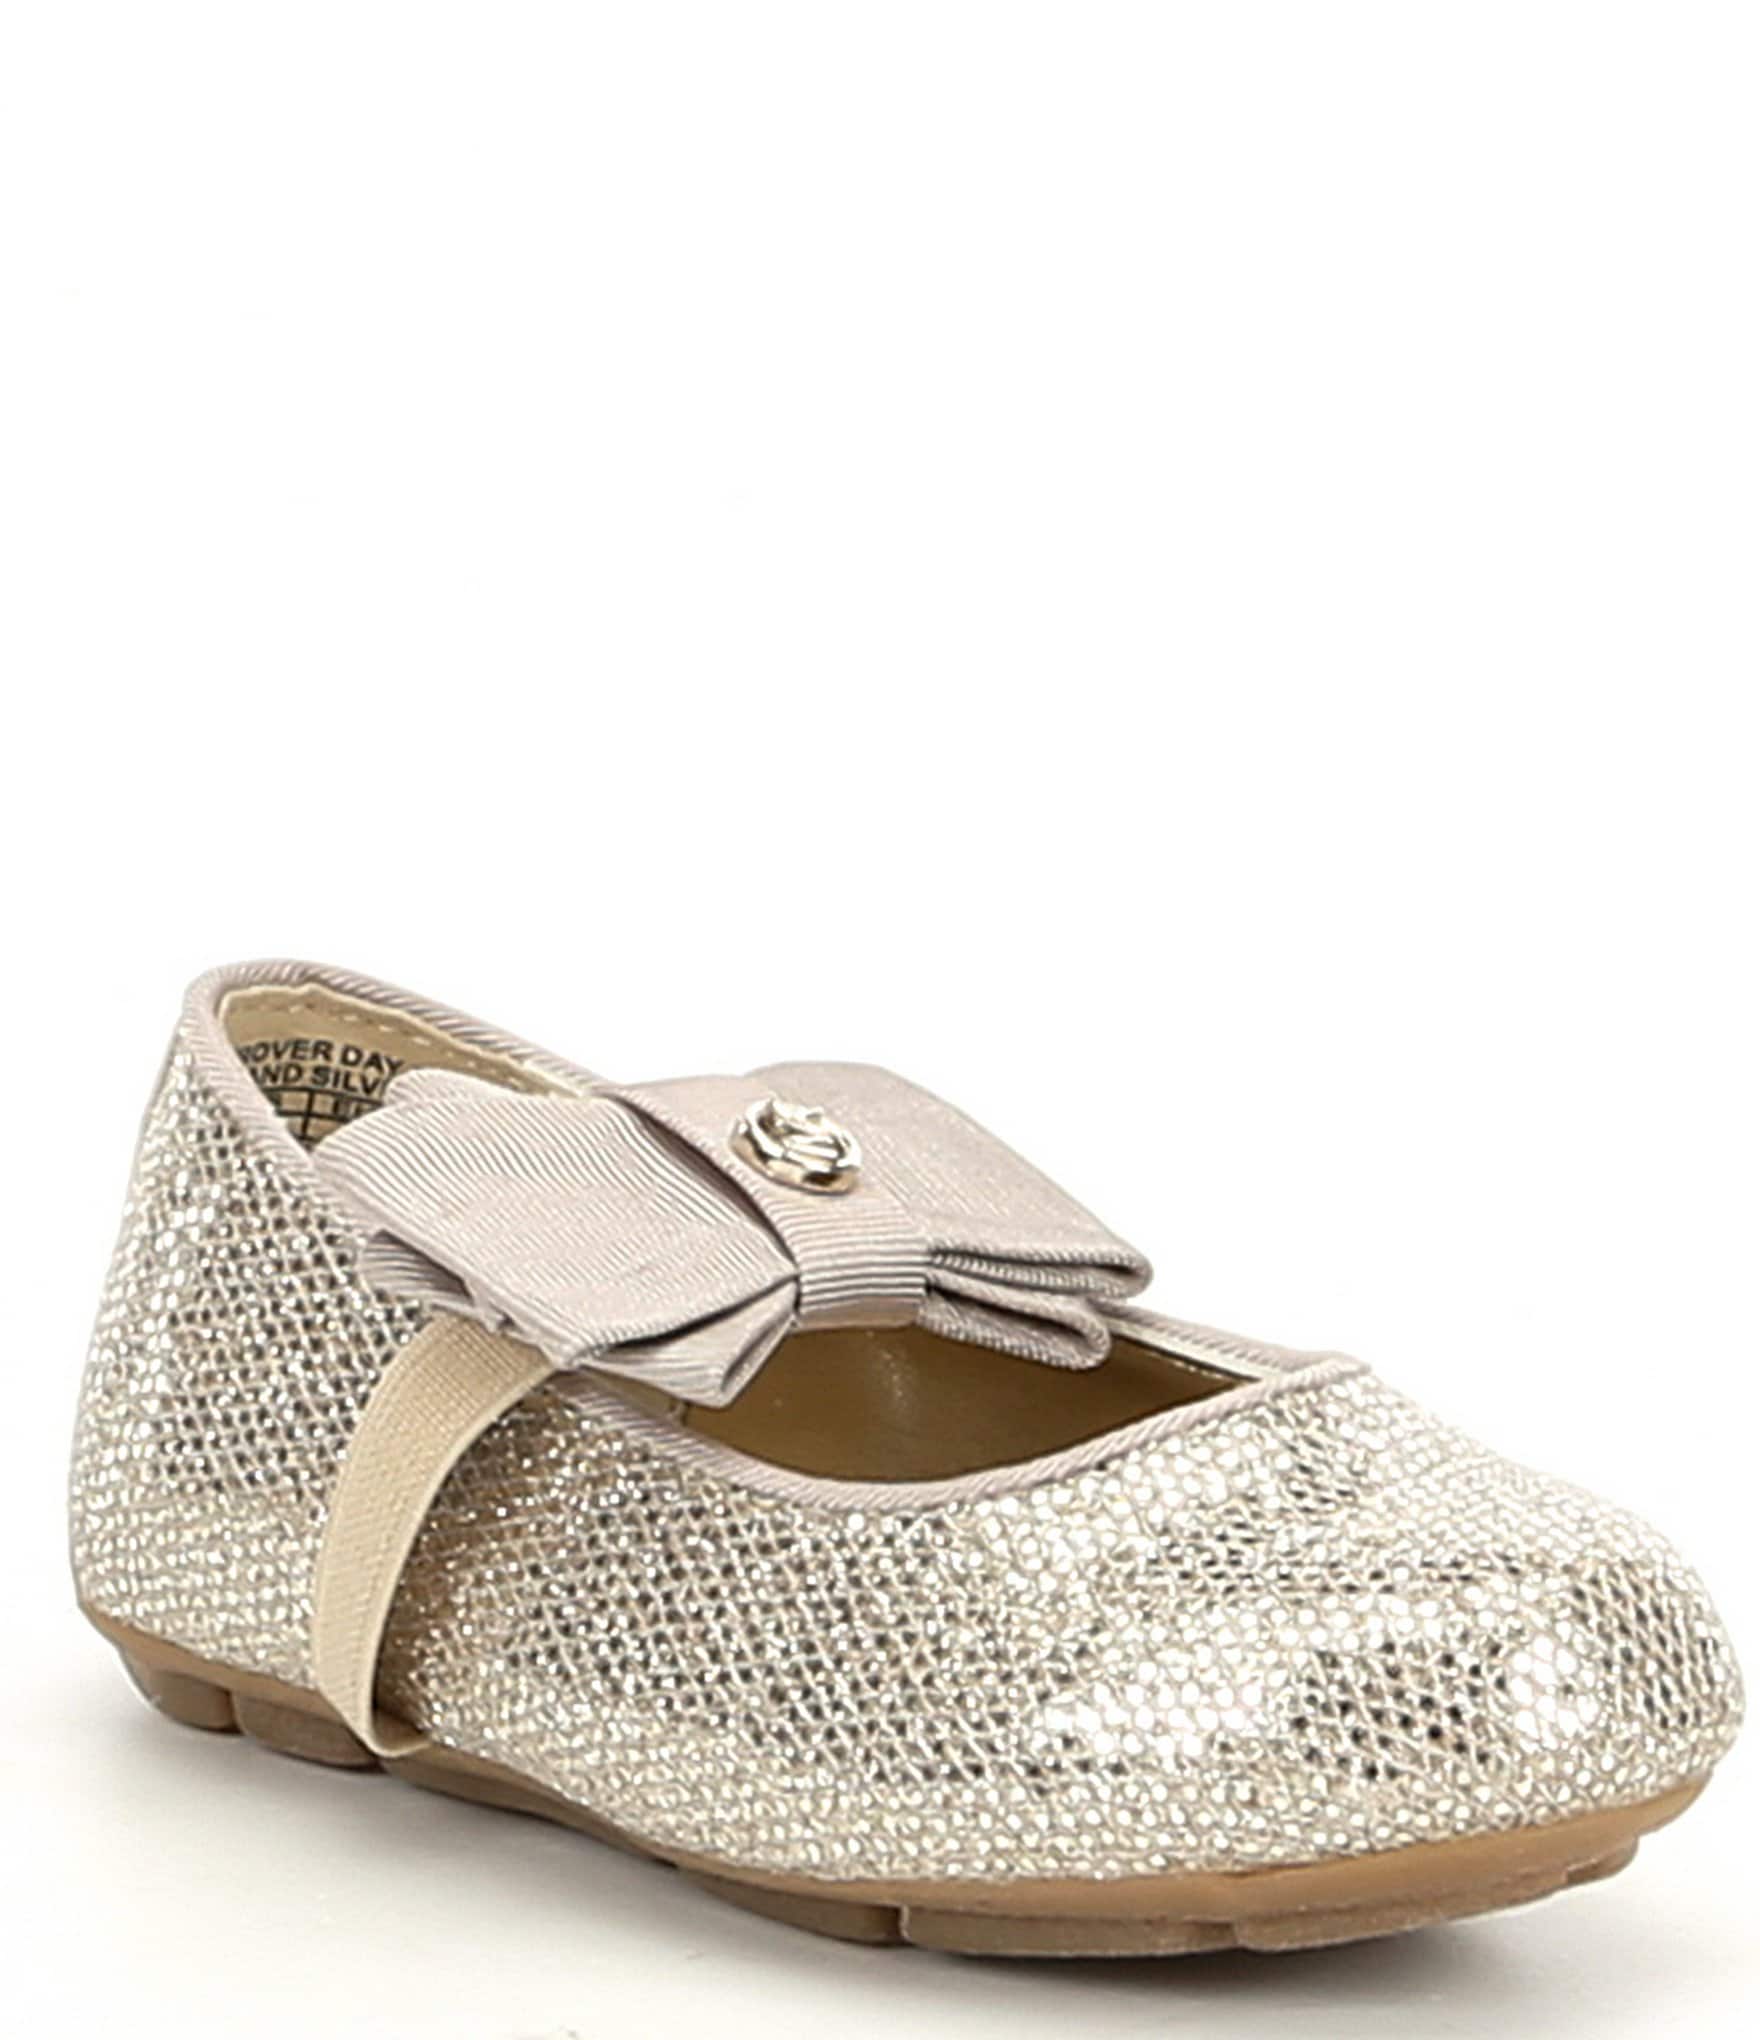 Michael Kors Toddler Girls' Shoes 